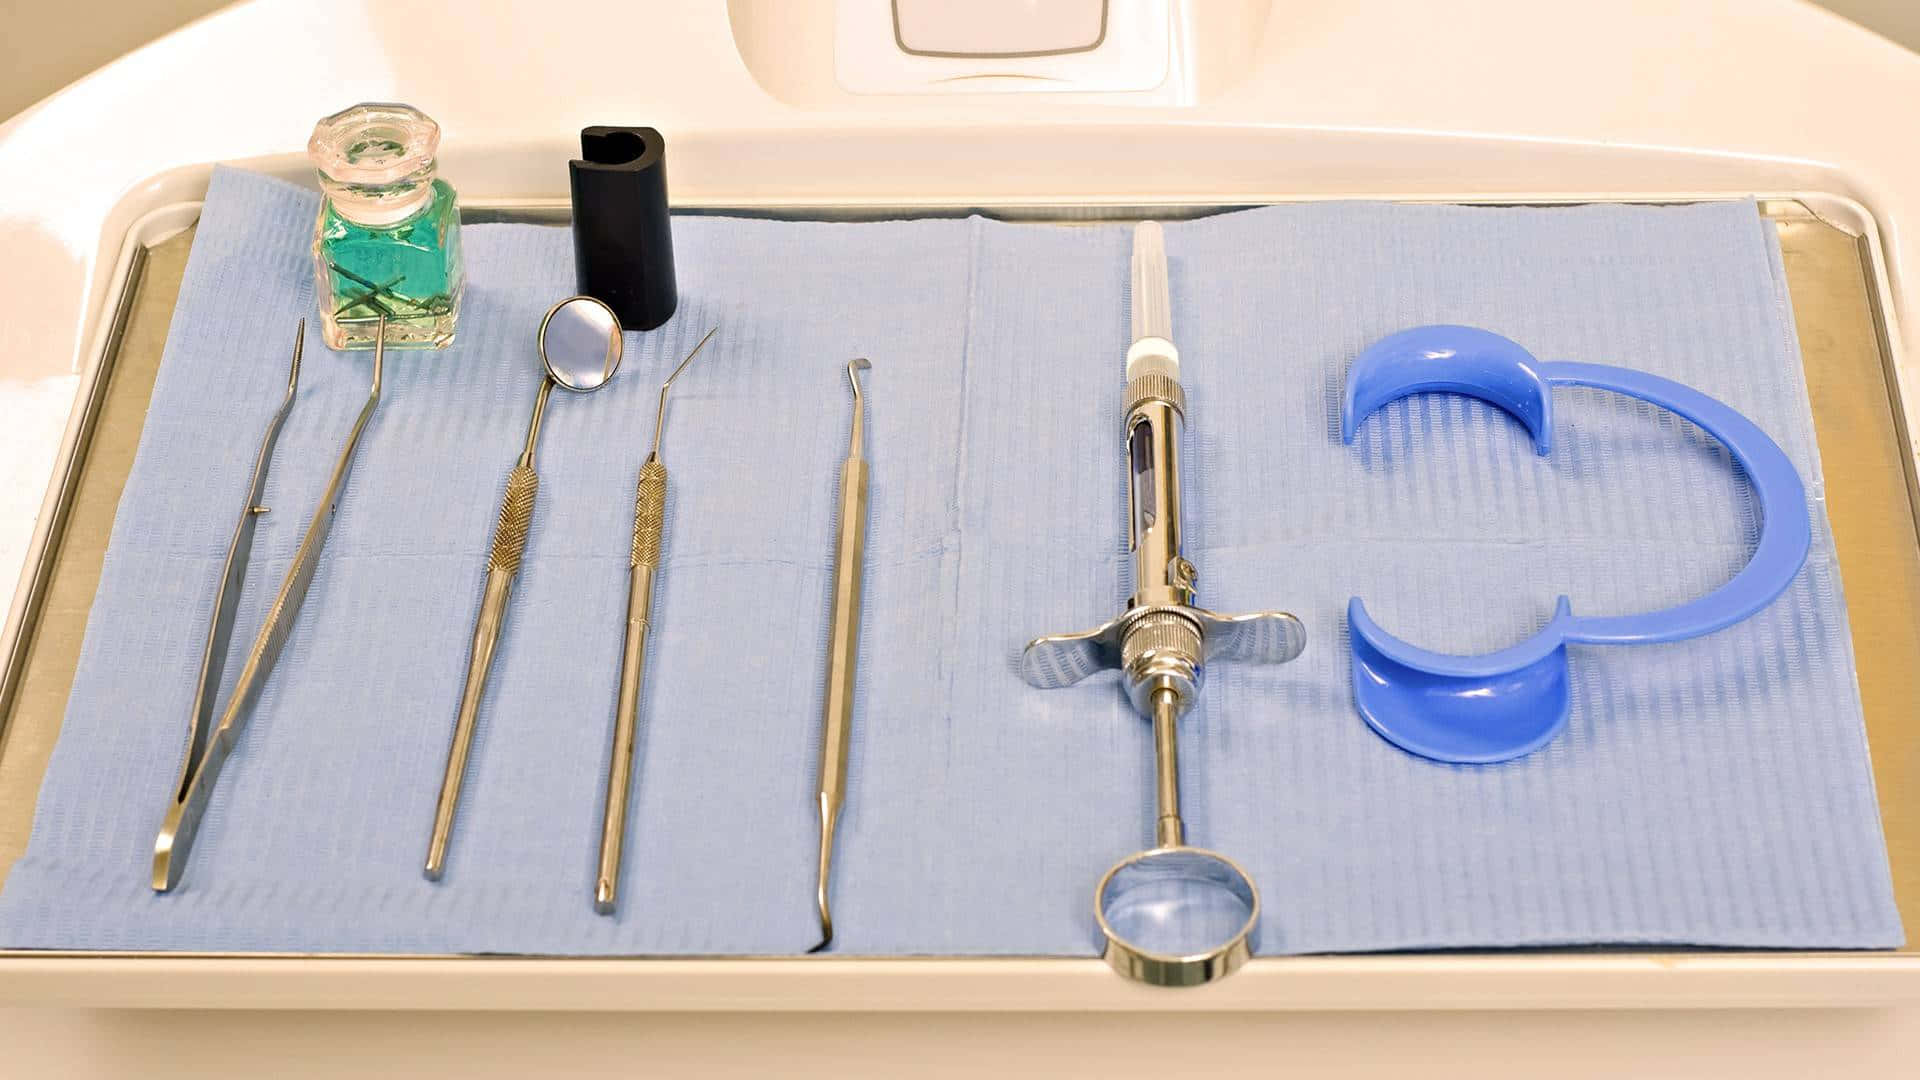 Dental Equipment On A Tray